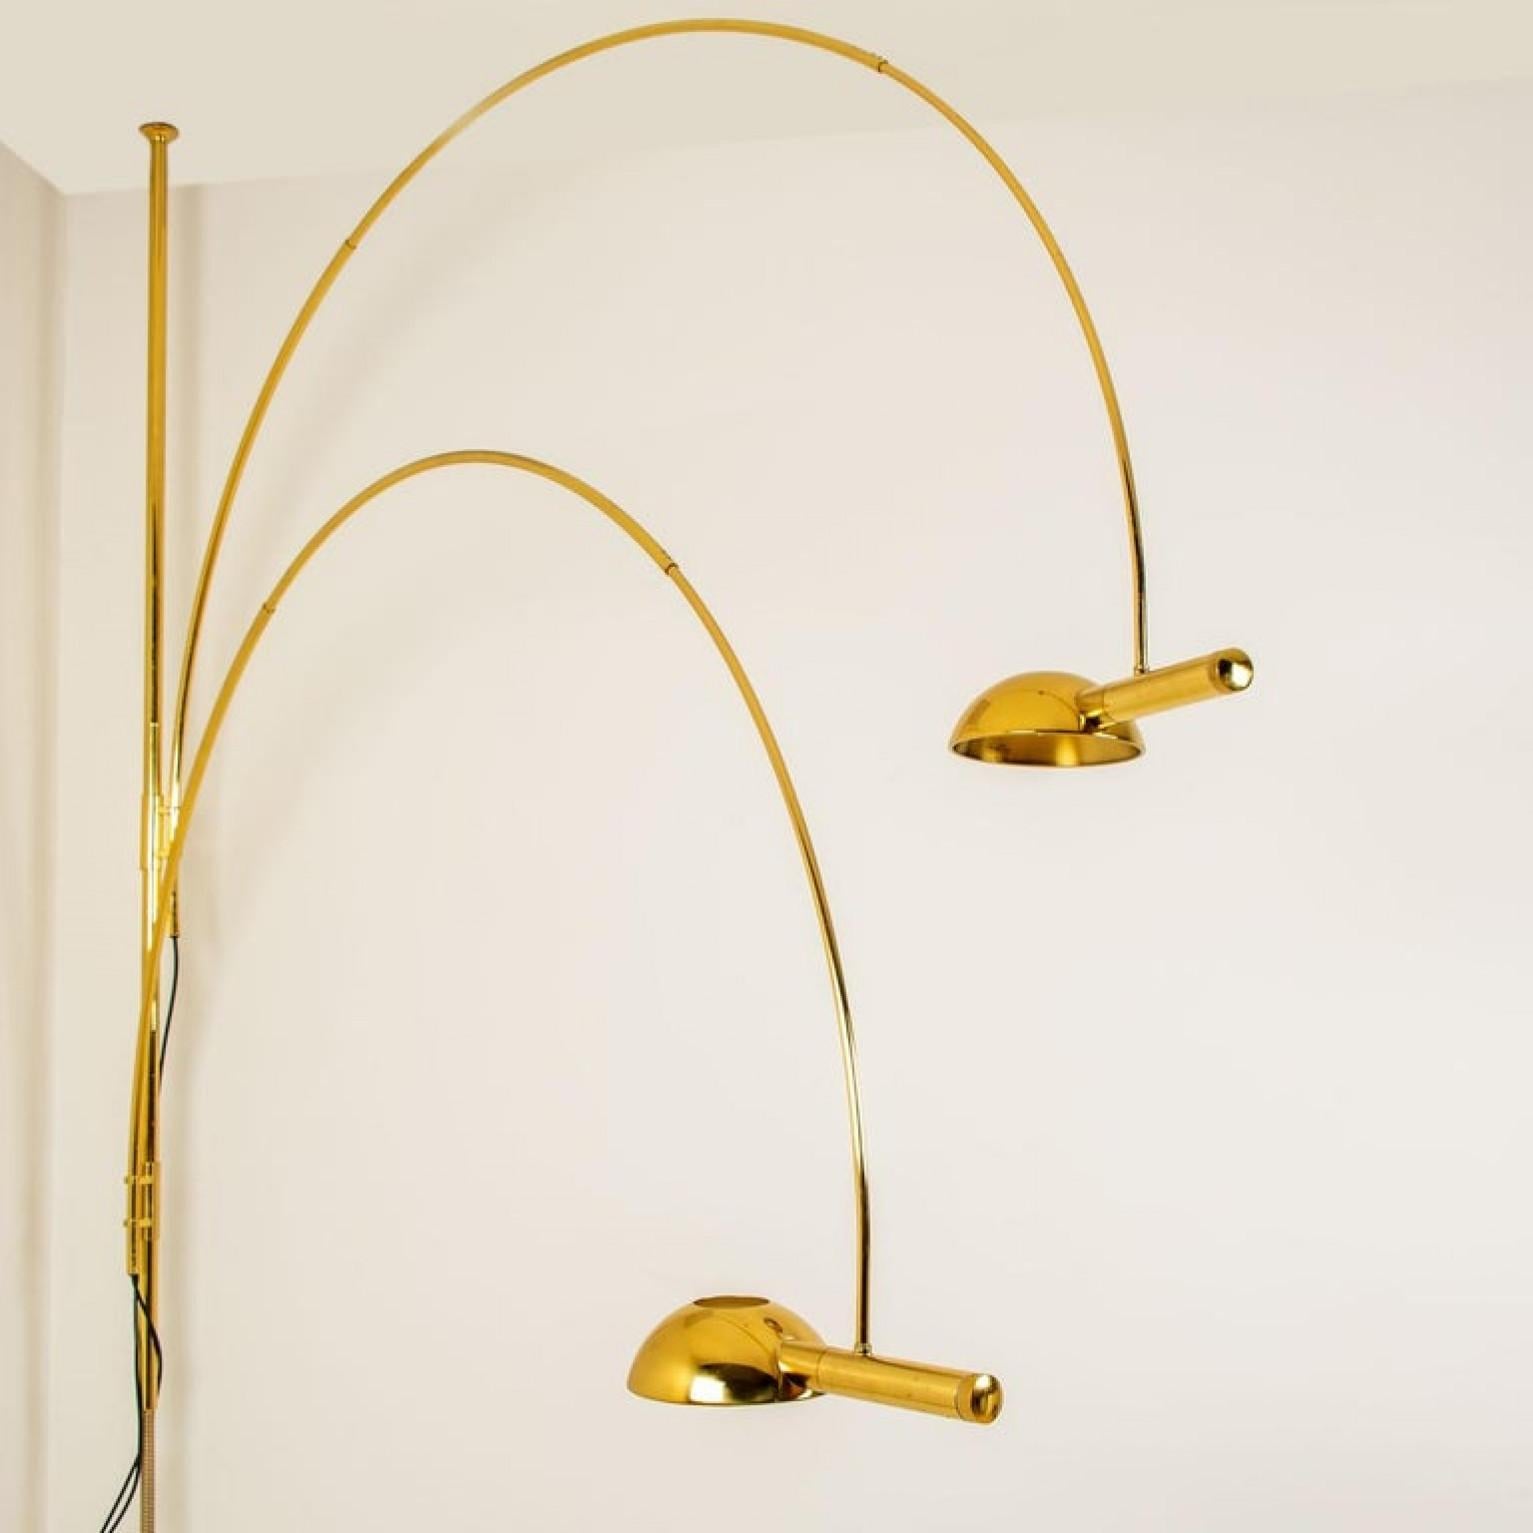 German Florian Schulz Double Ball Brass Arc Floor Lamp, Height Adjustable, 1970 For Sale